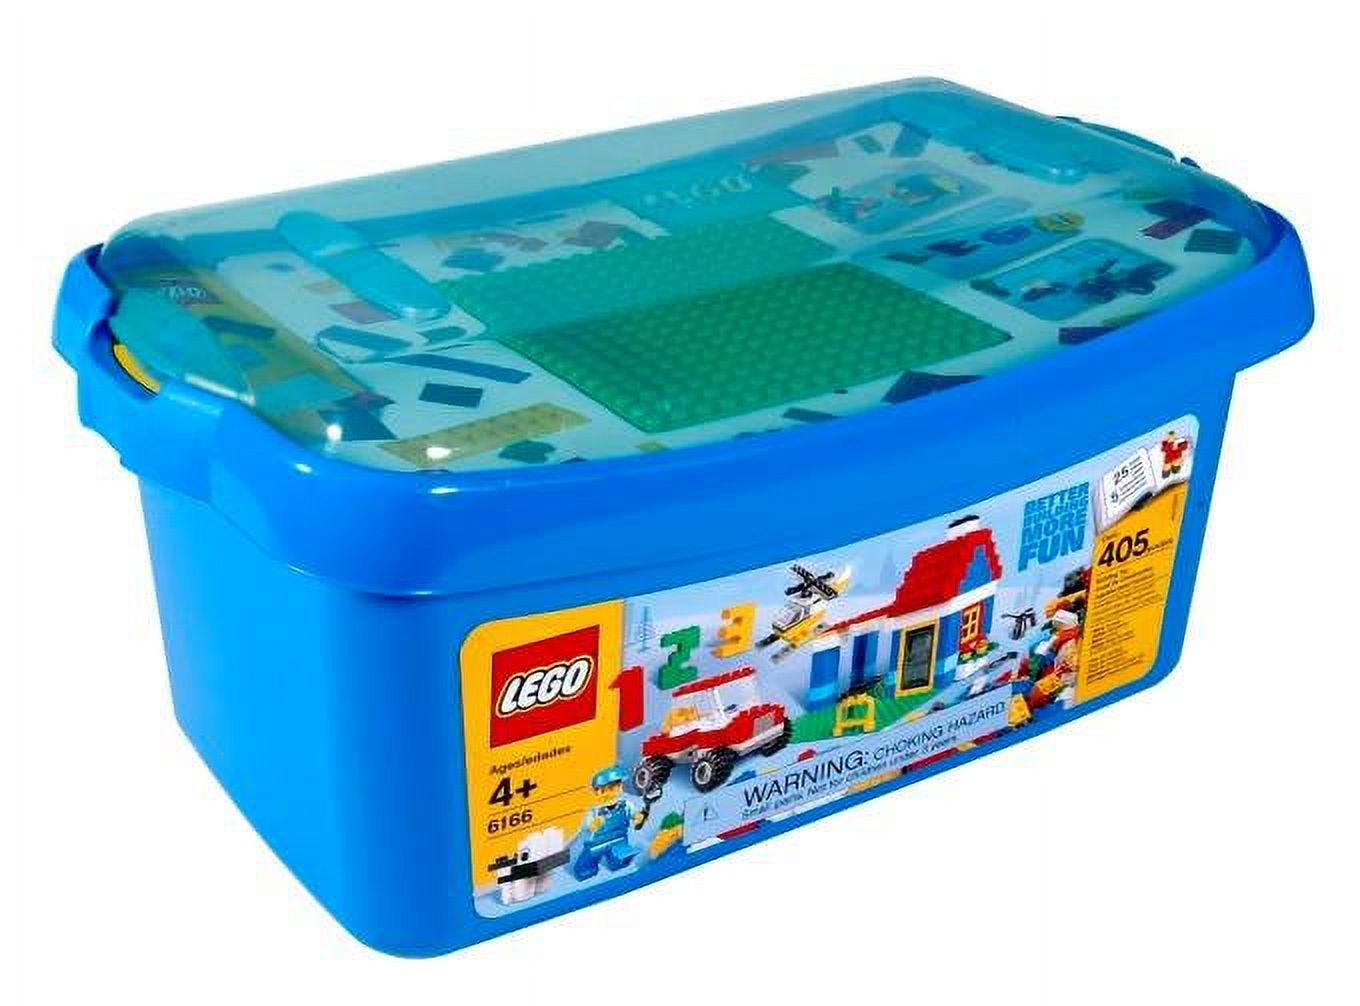 Lego Building Set - image 1 of 2